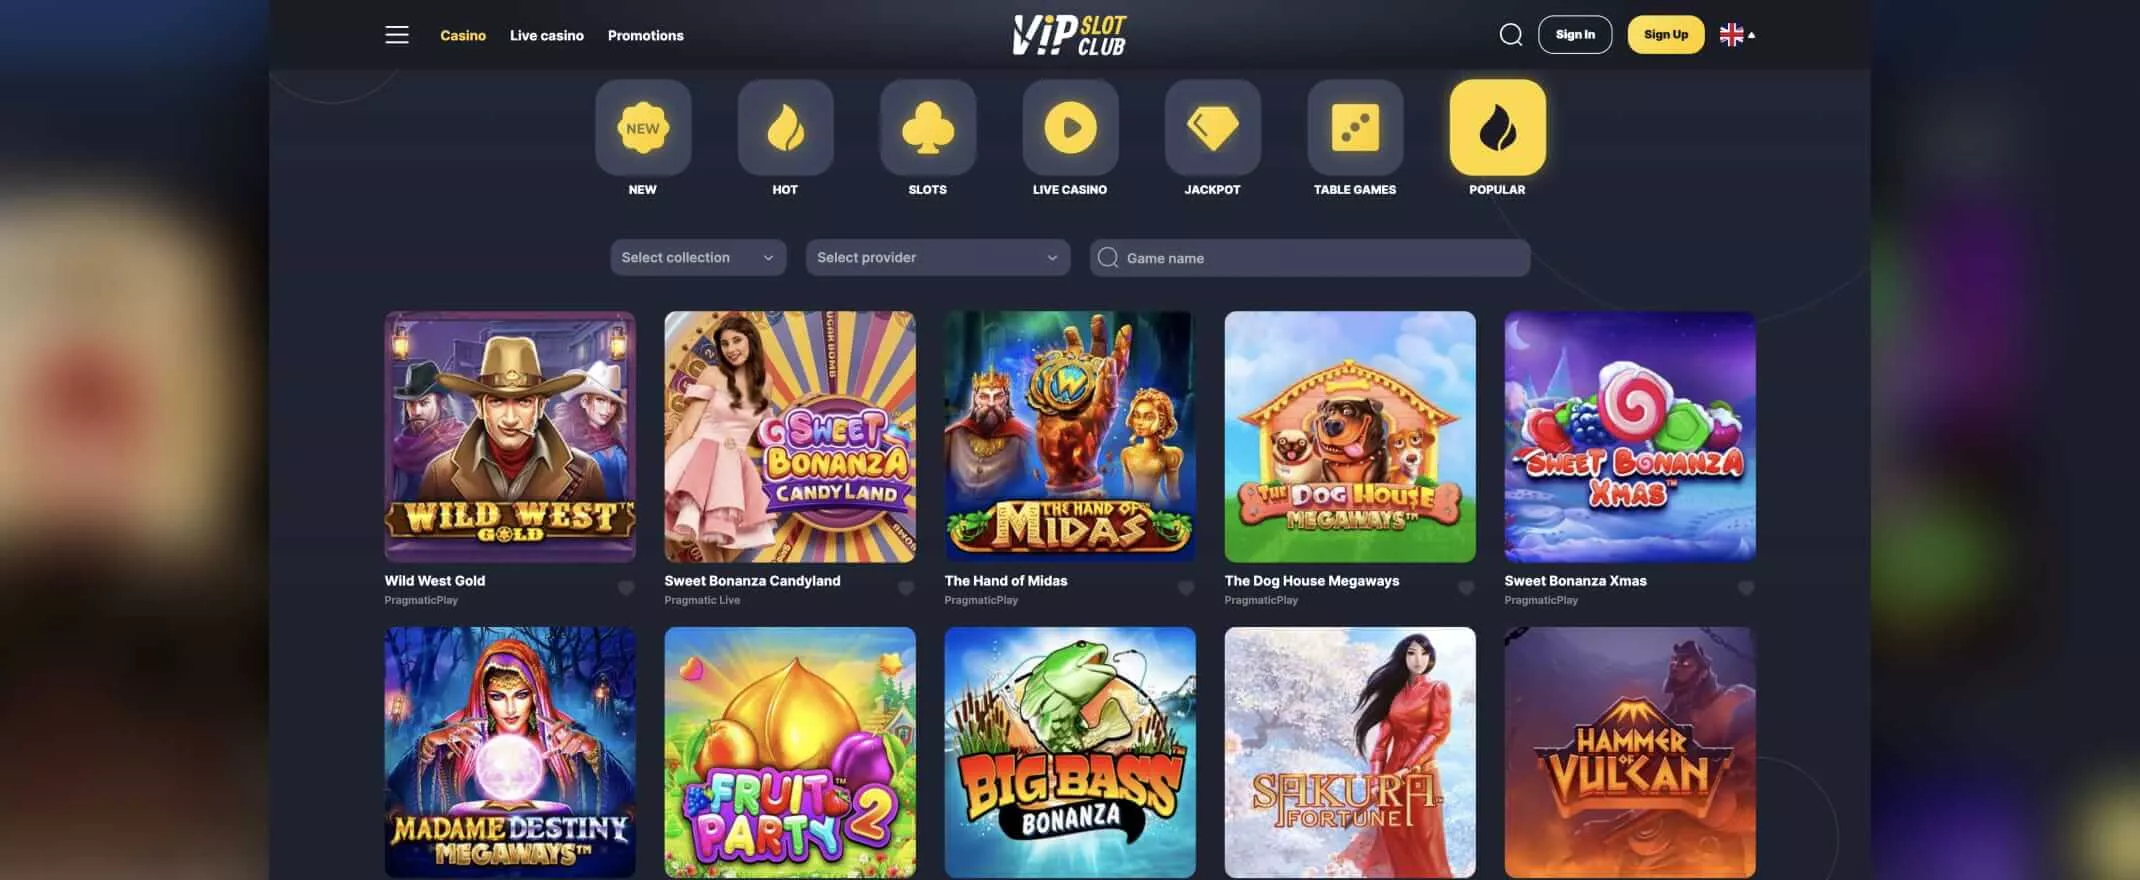 VipSlot Casino screenshot of the games